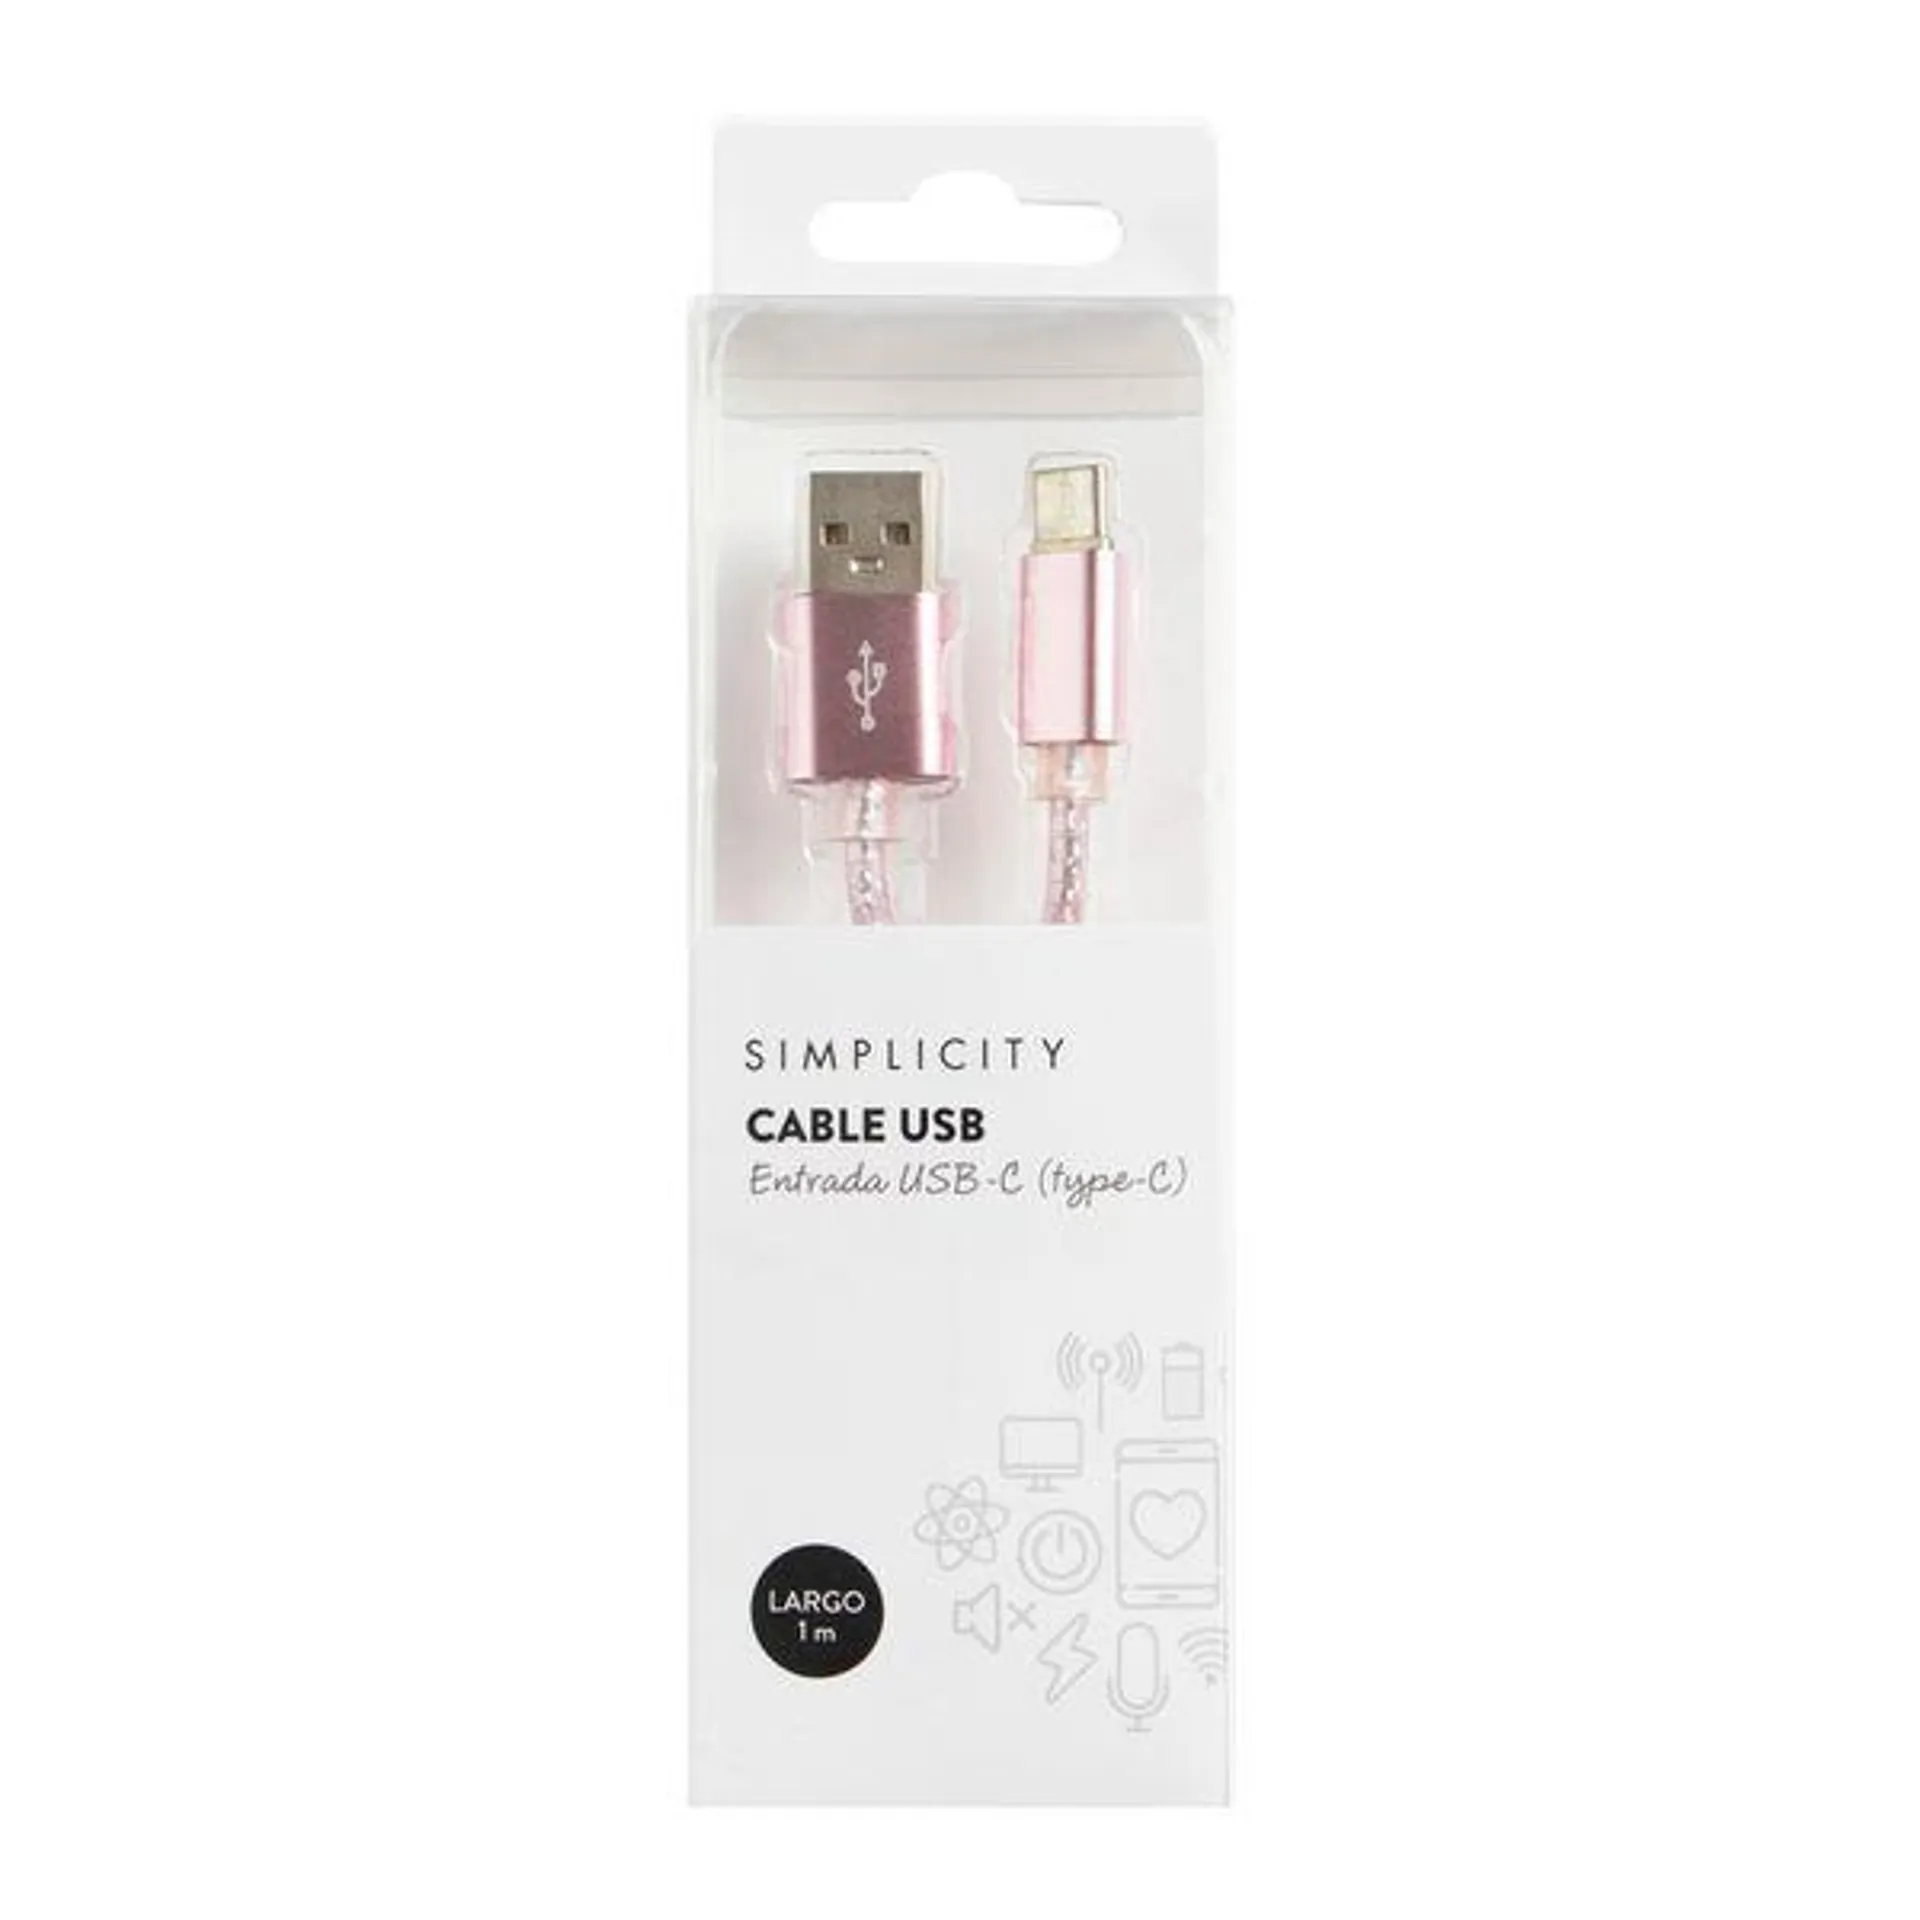 Cable USB Simplicity Entrada USB-C (type-C)